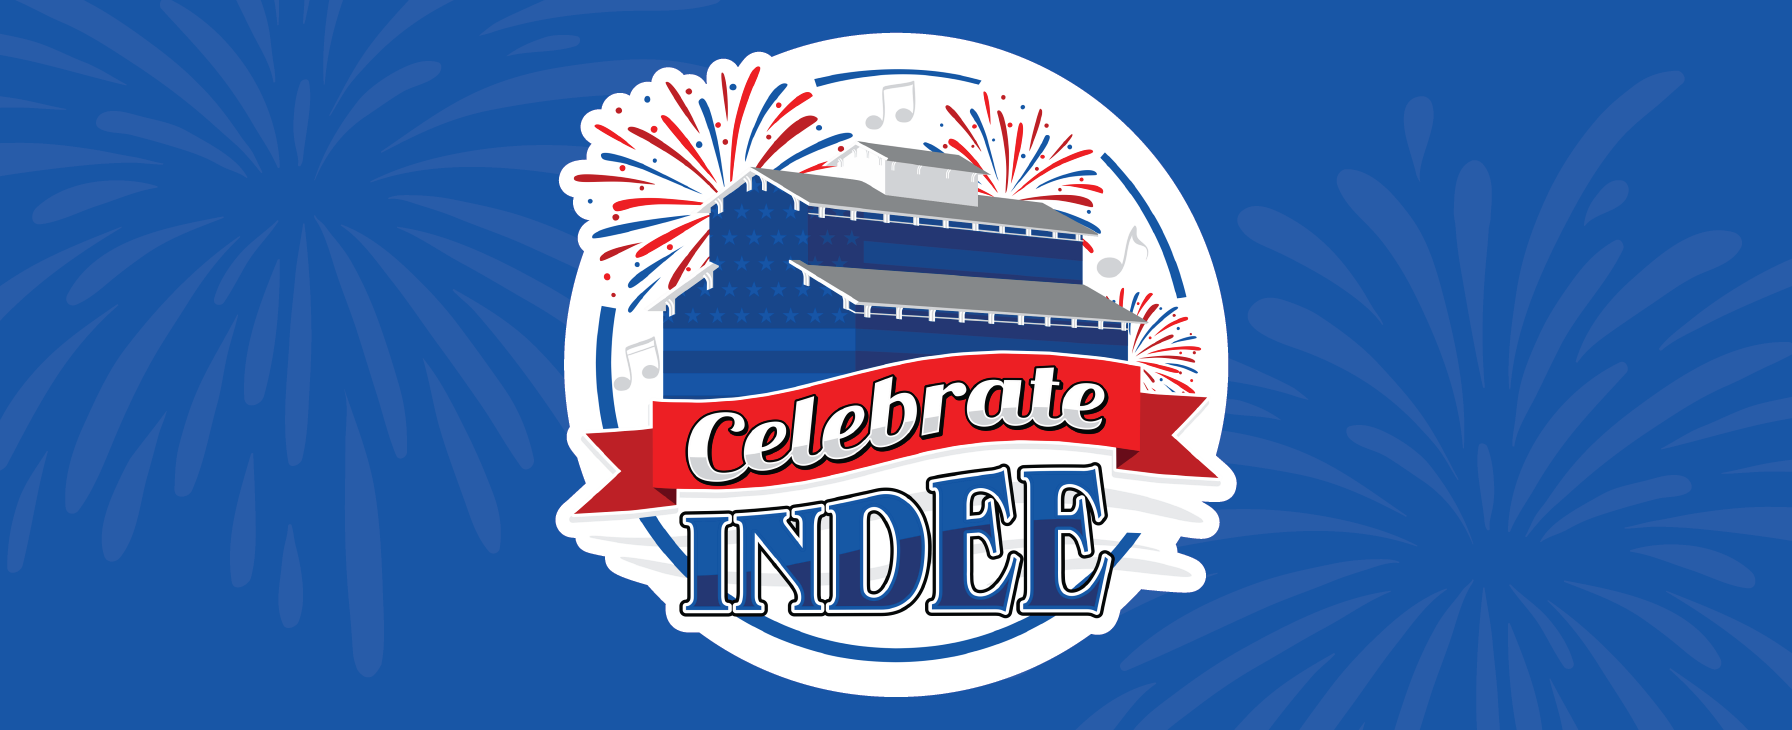 Celebrate Indee event logo